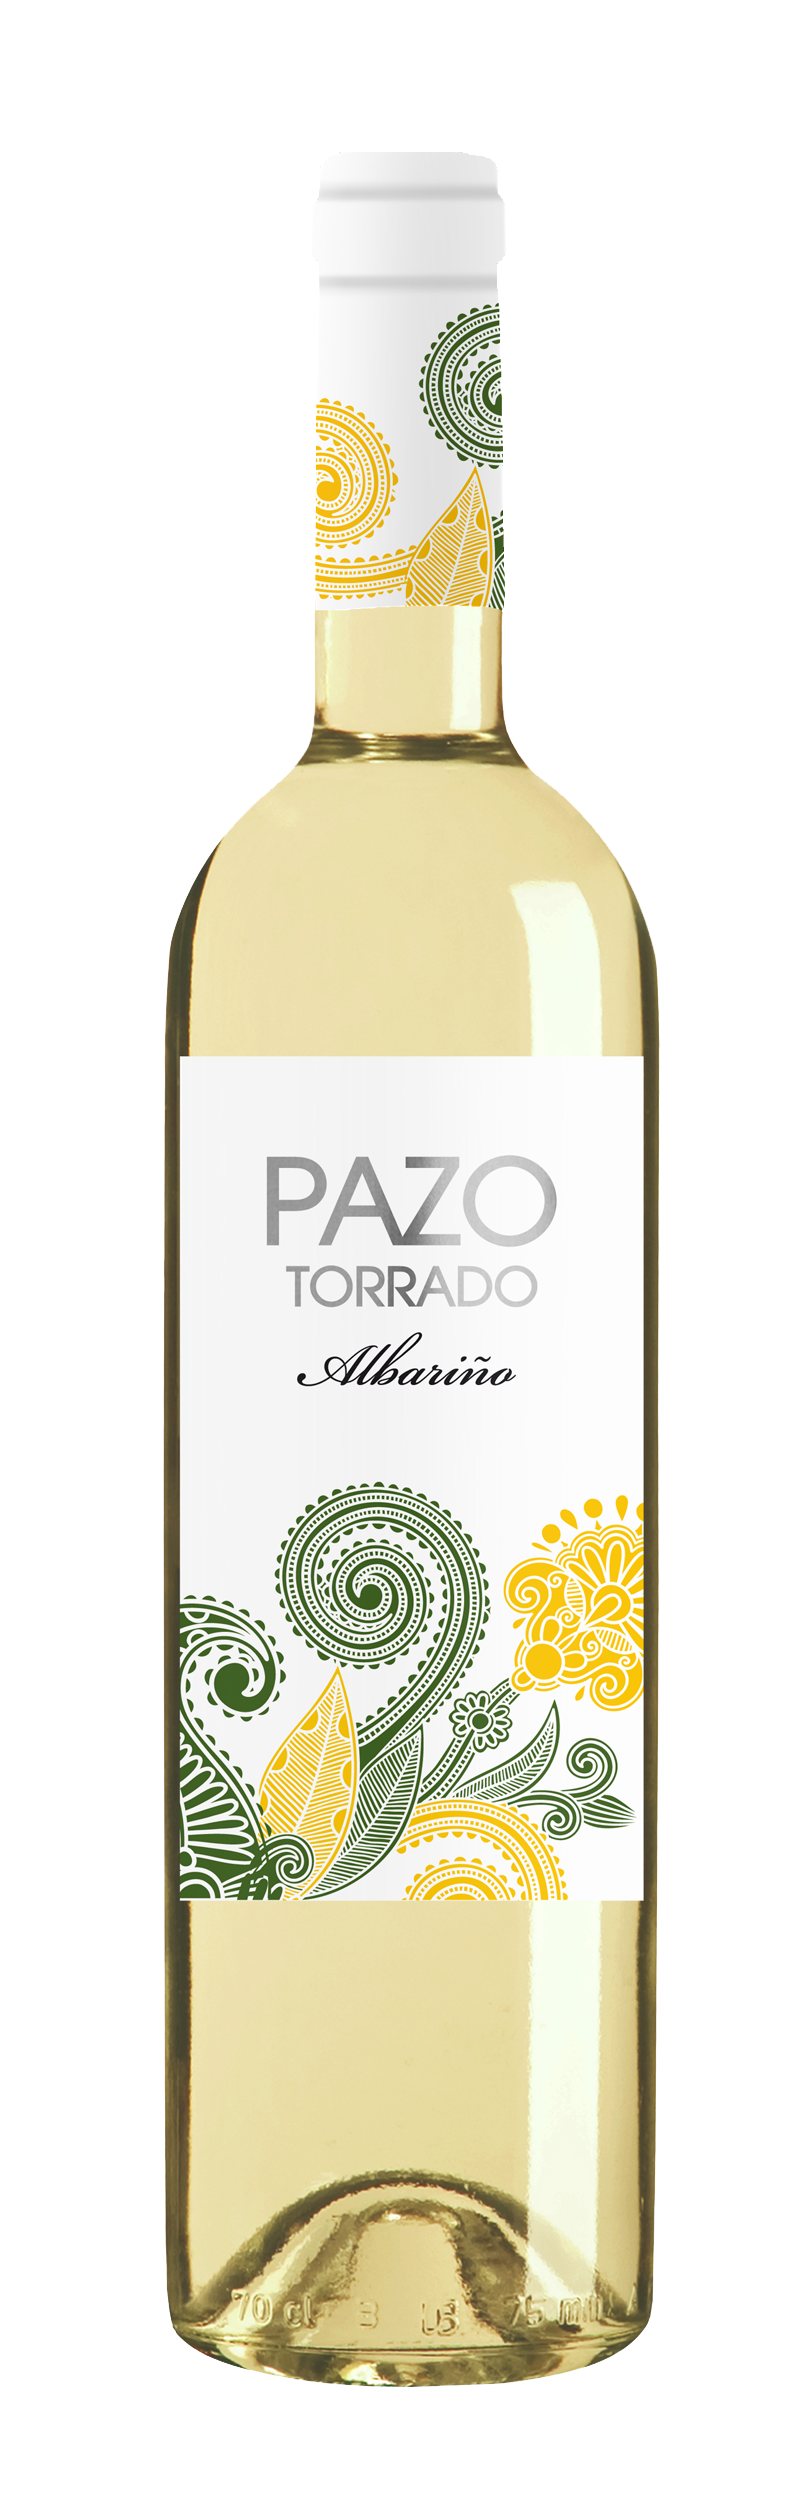 PazoTorrado Albarino by WineTrust